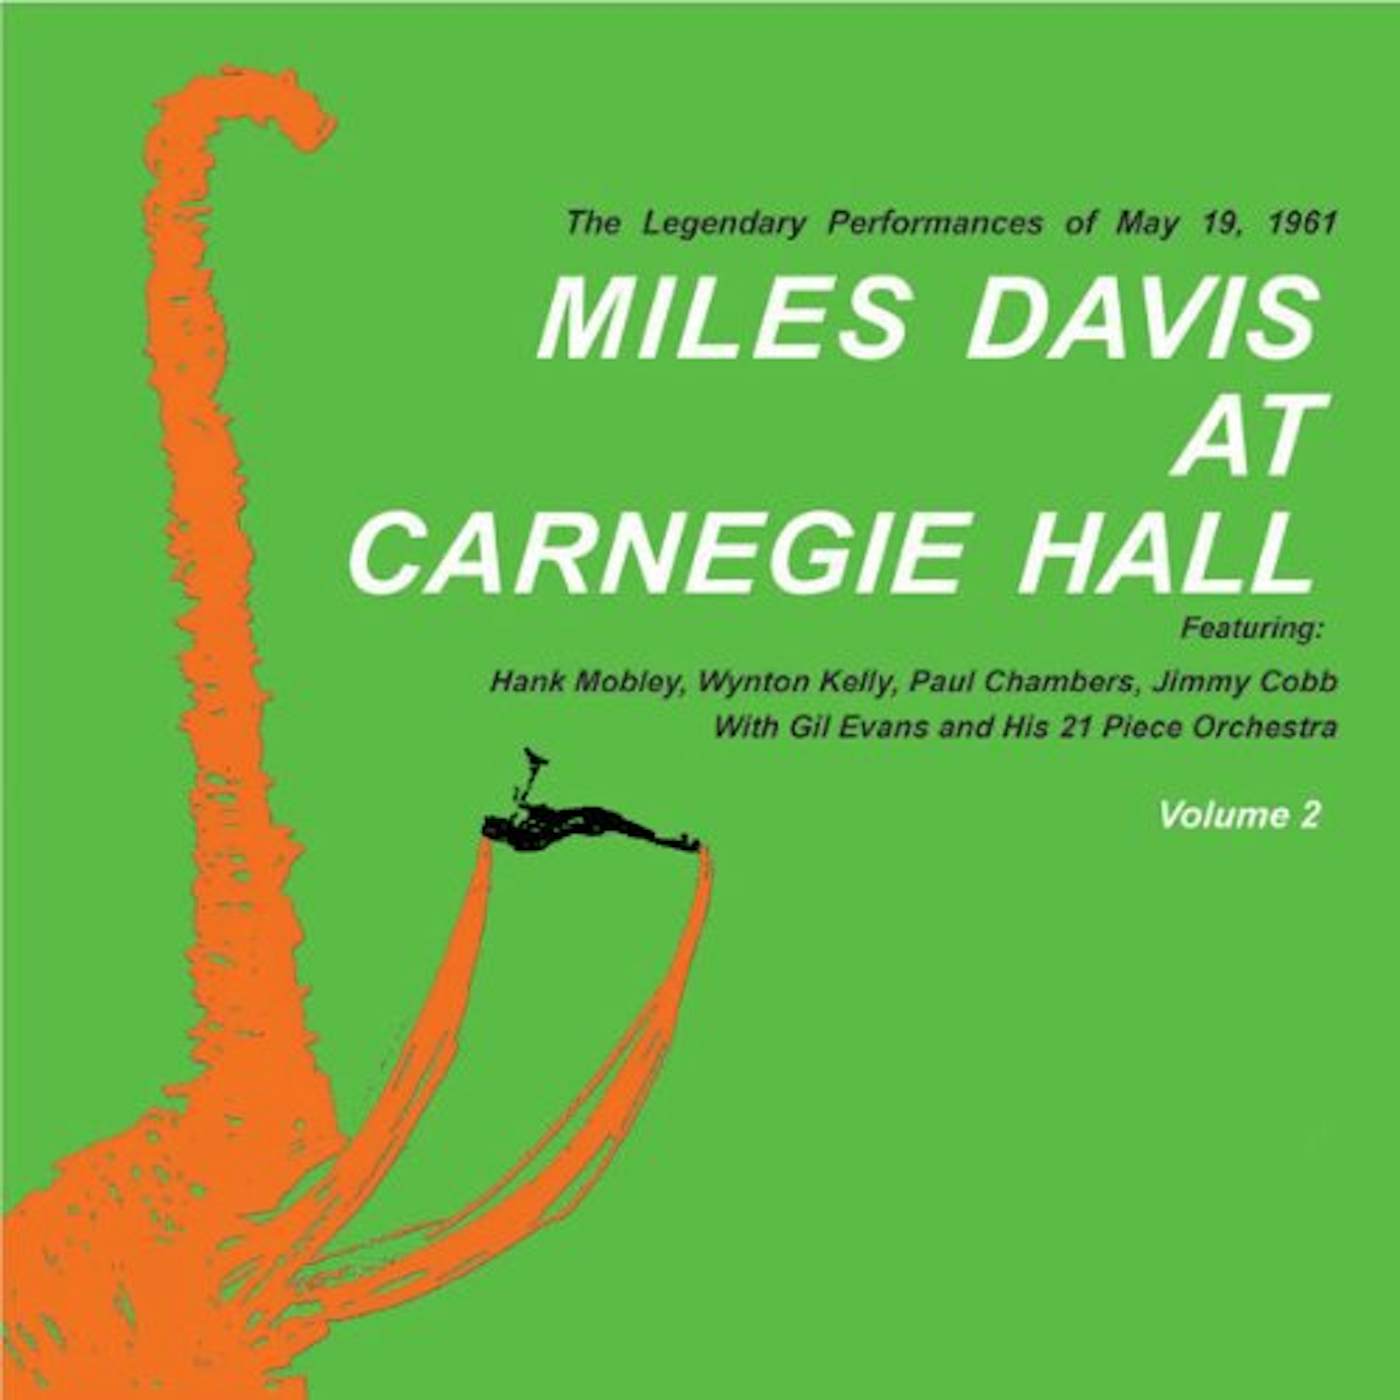 MILES DAVIS AT CARNEGIE HALL 2 Vinyl Record